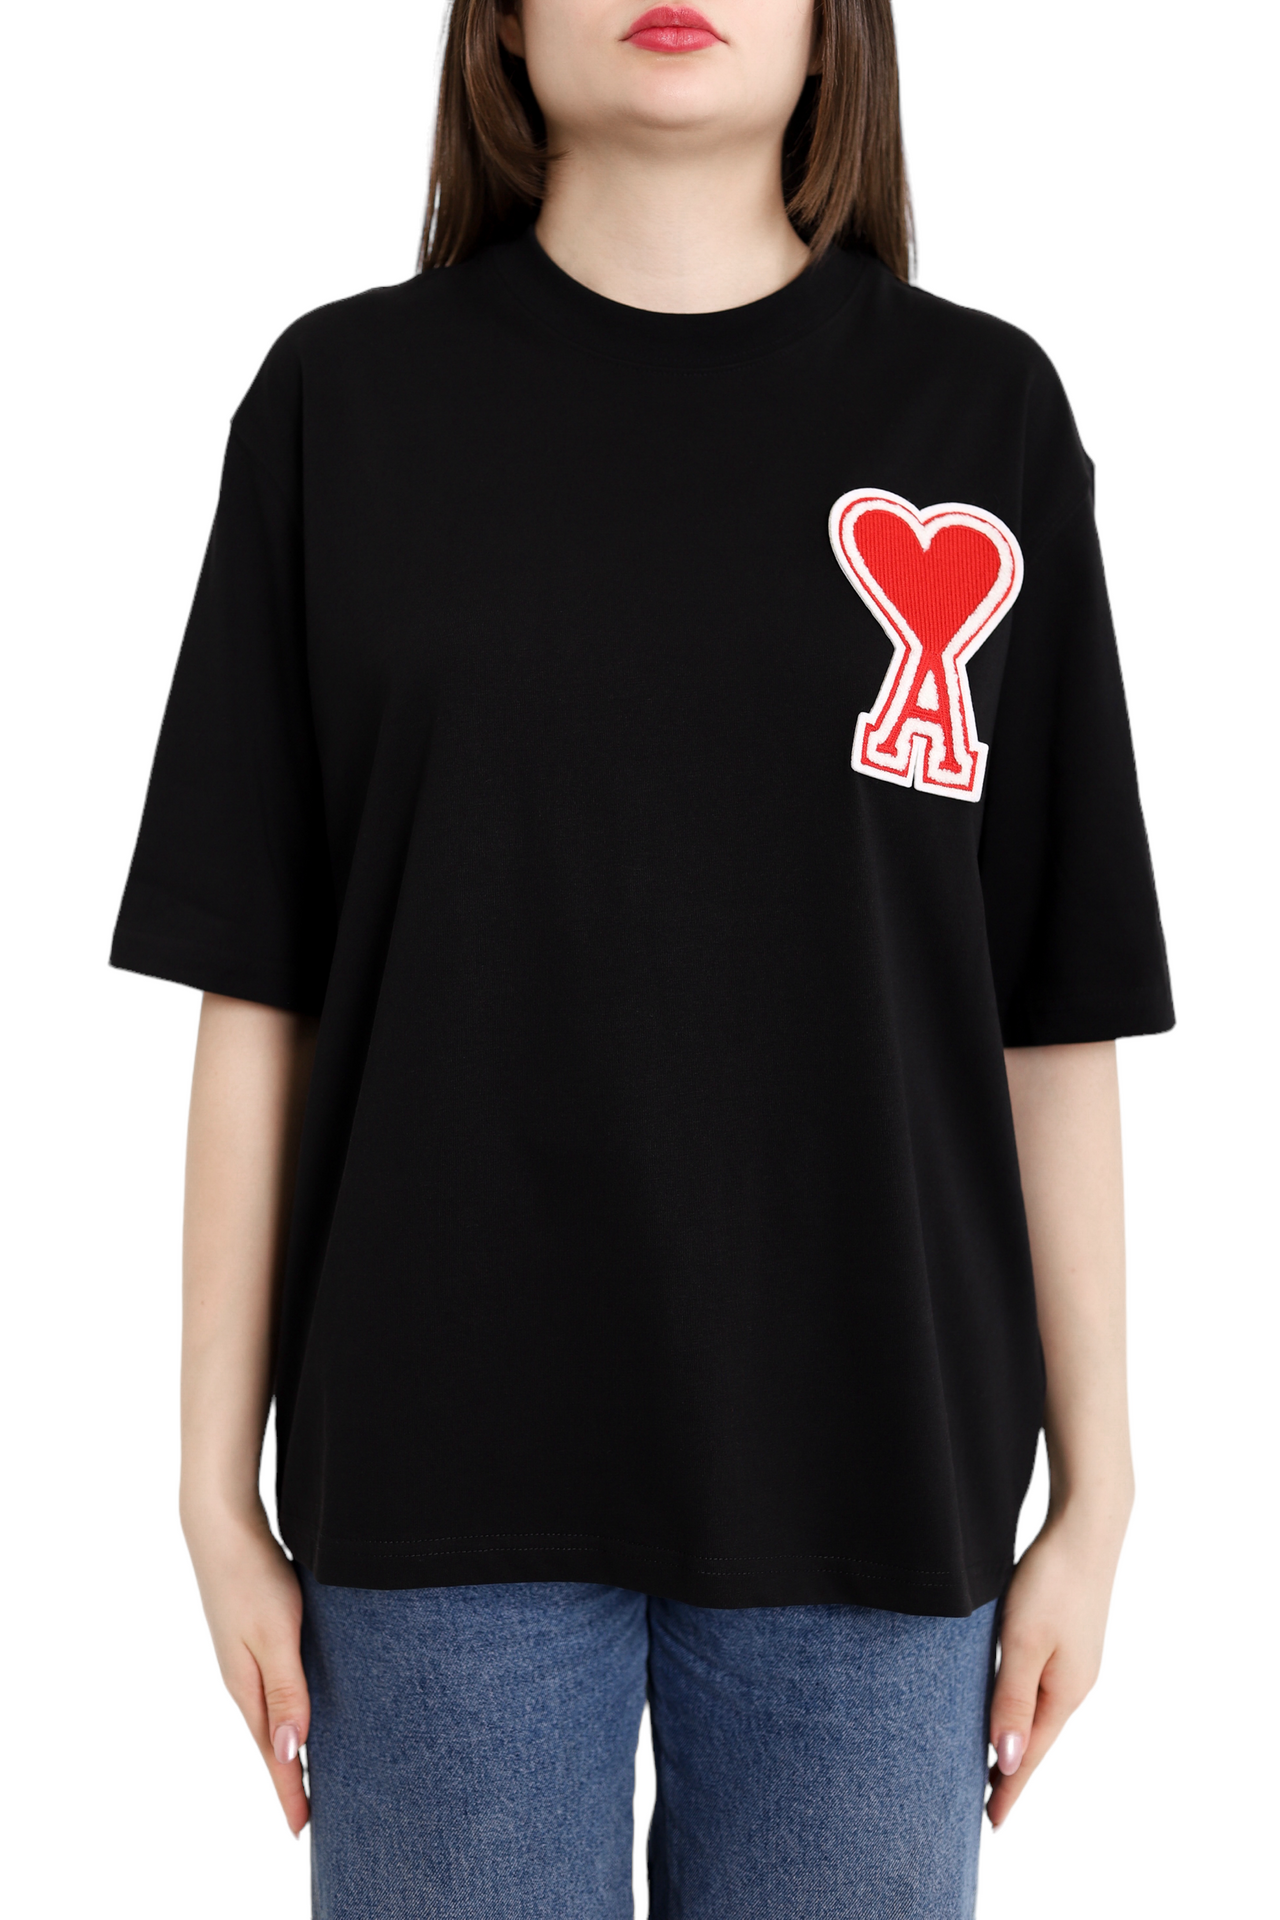 AMI Paris Exclusive Ami De Coeur T-Shirt Black Red Heart